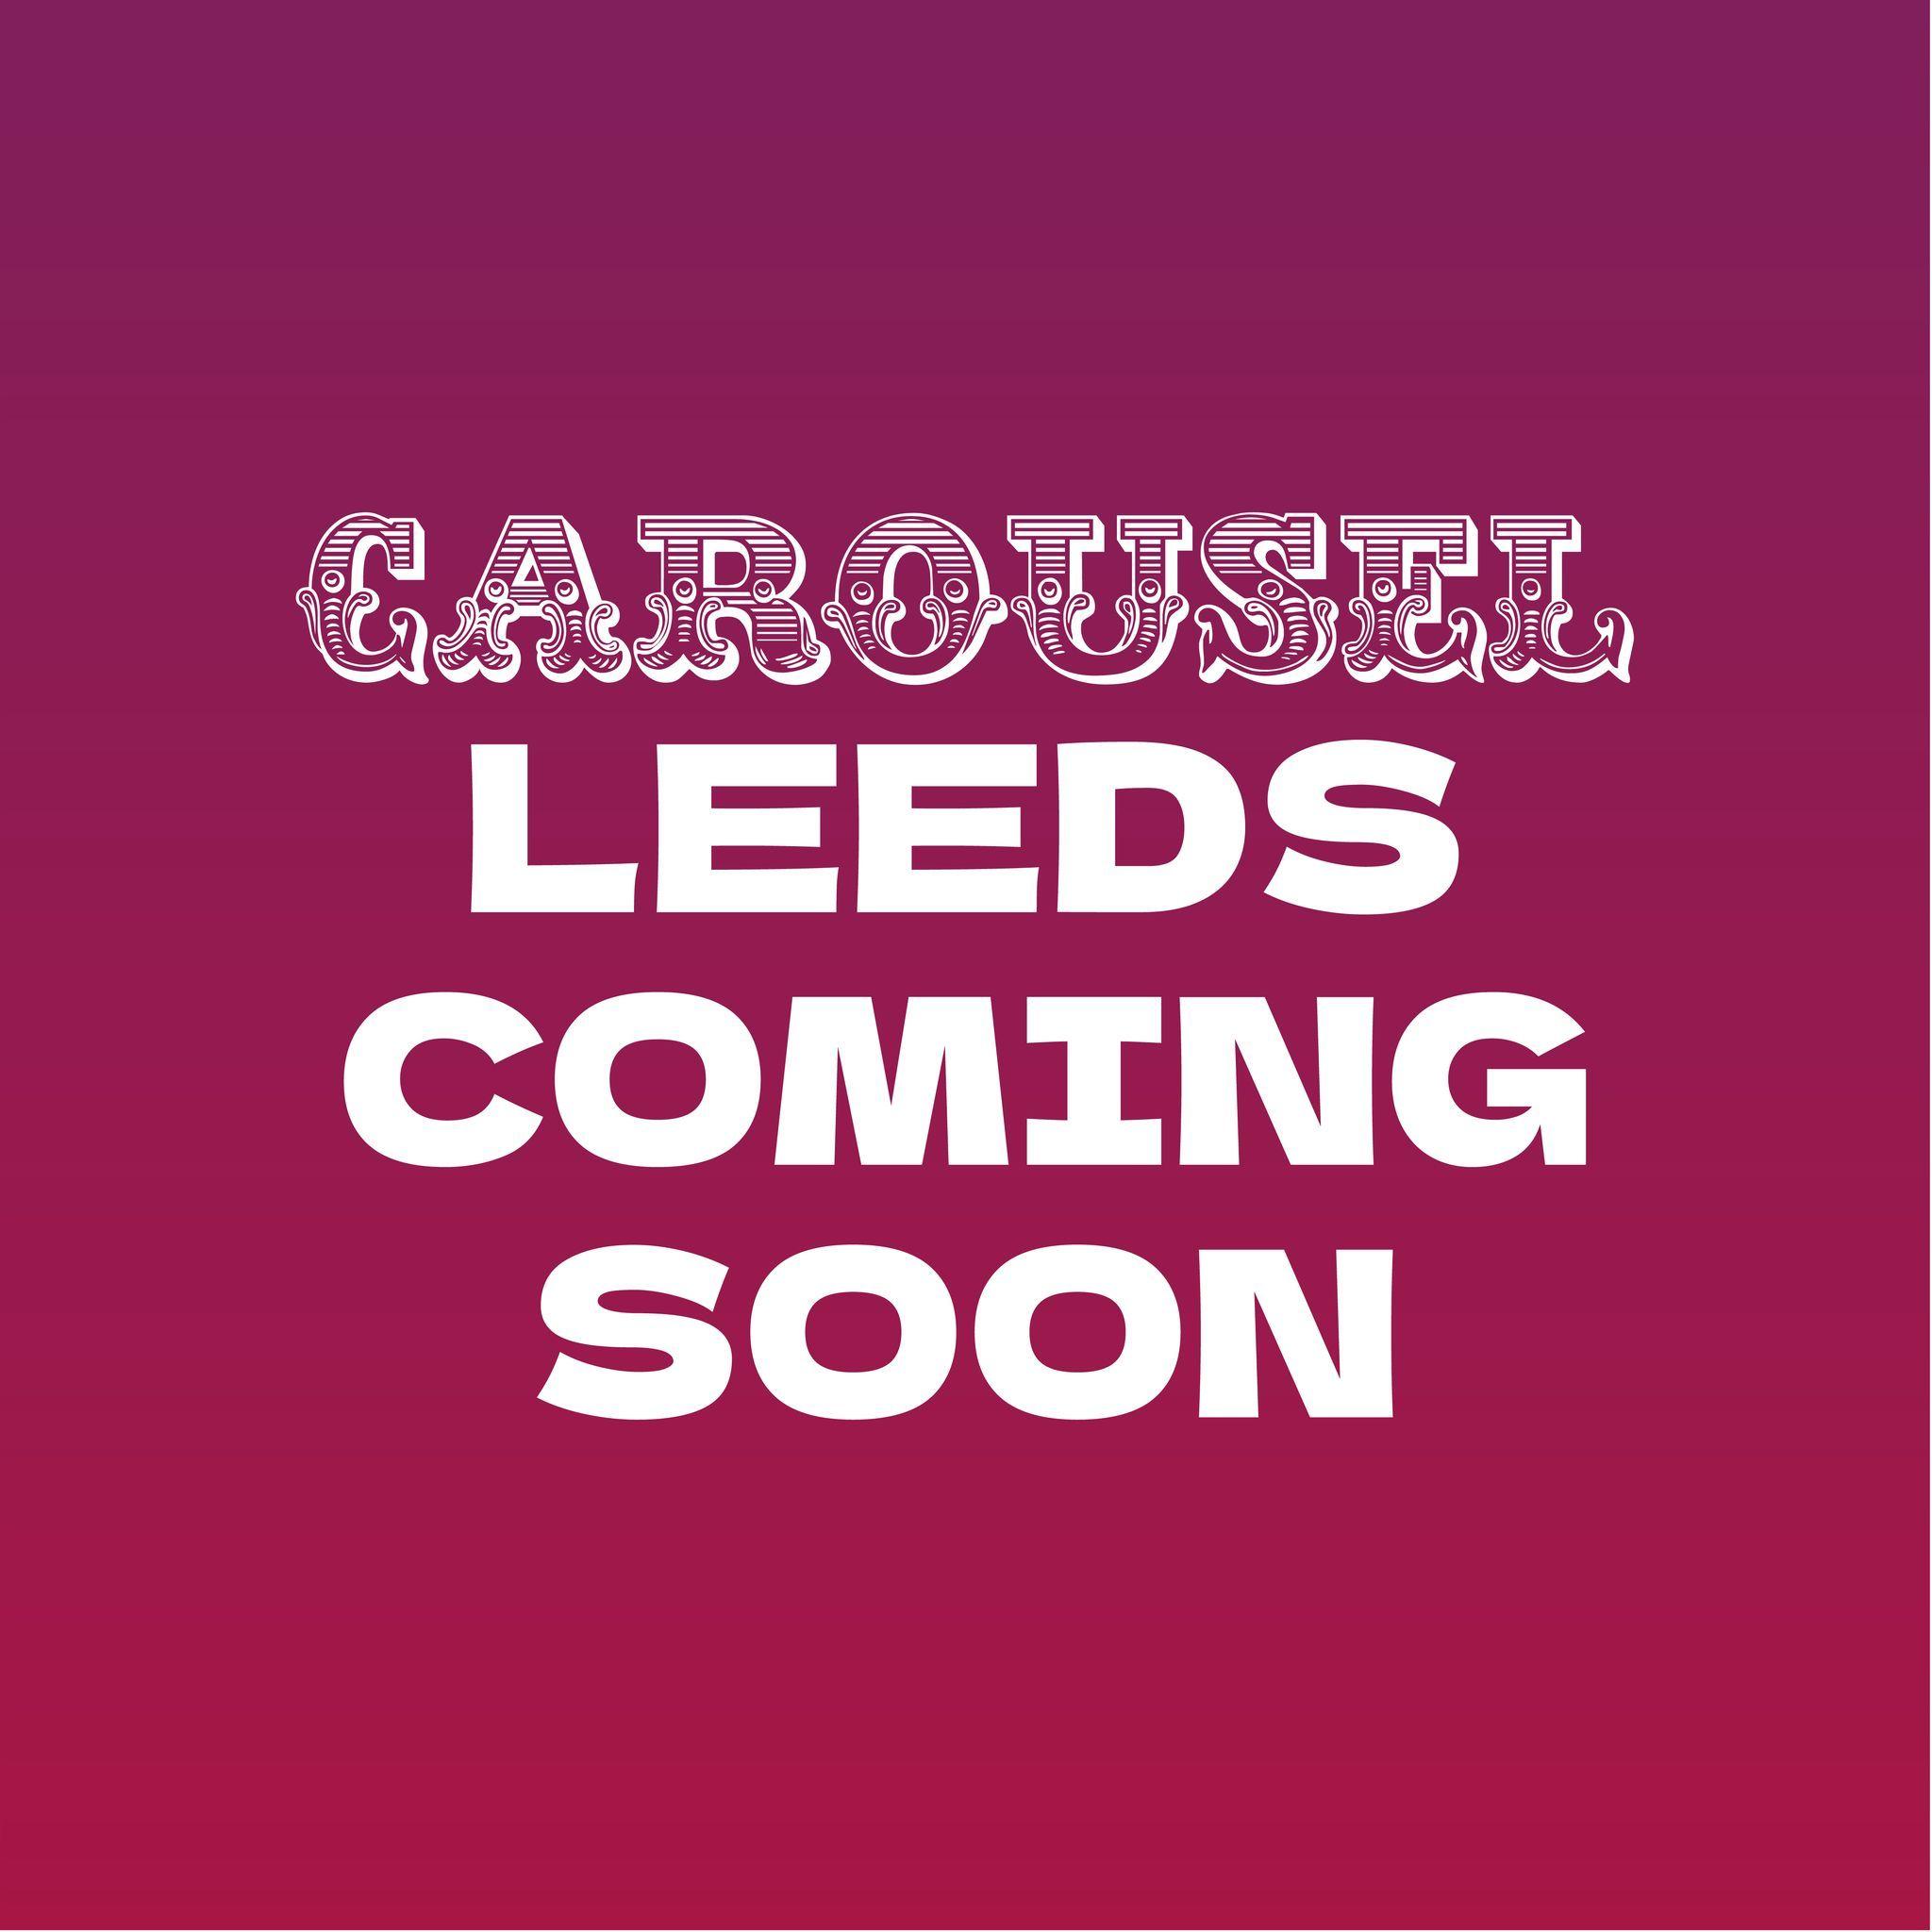 Carousel Leeds, Carousel & Home Leeds photo #1